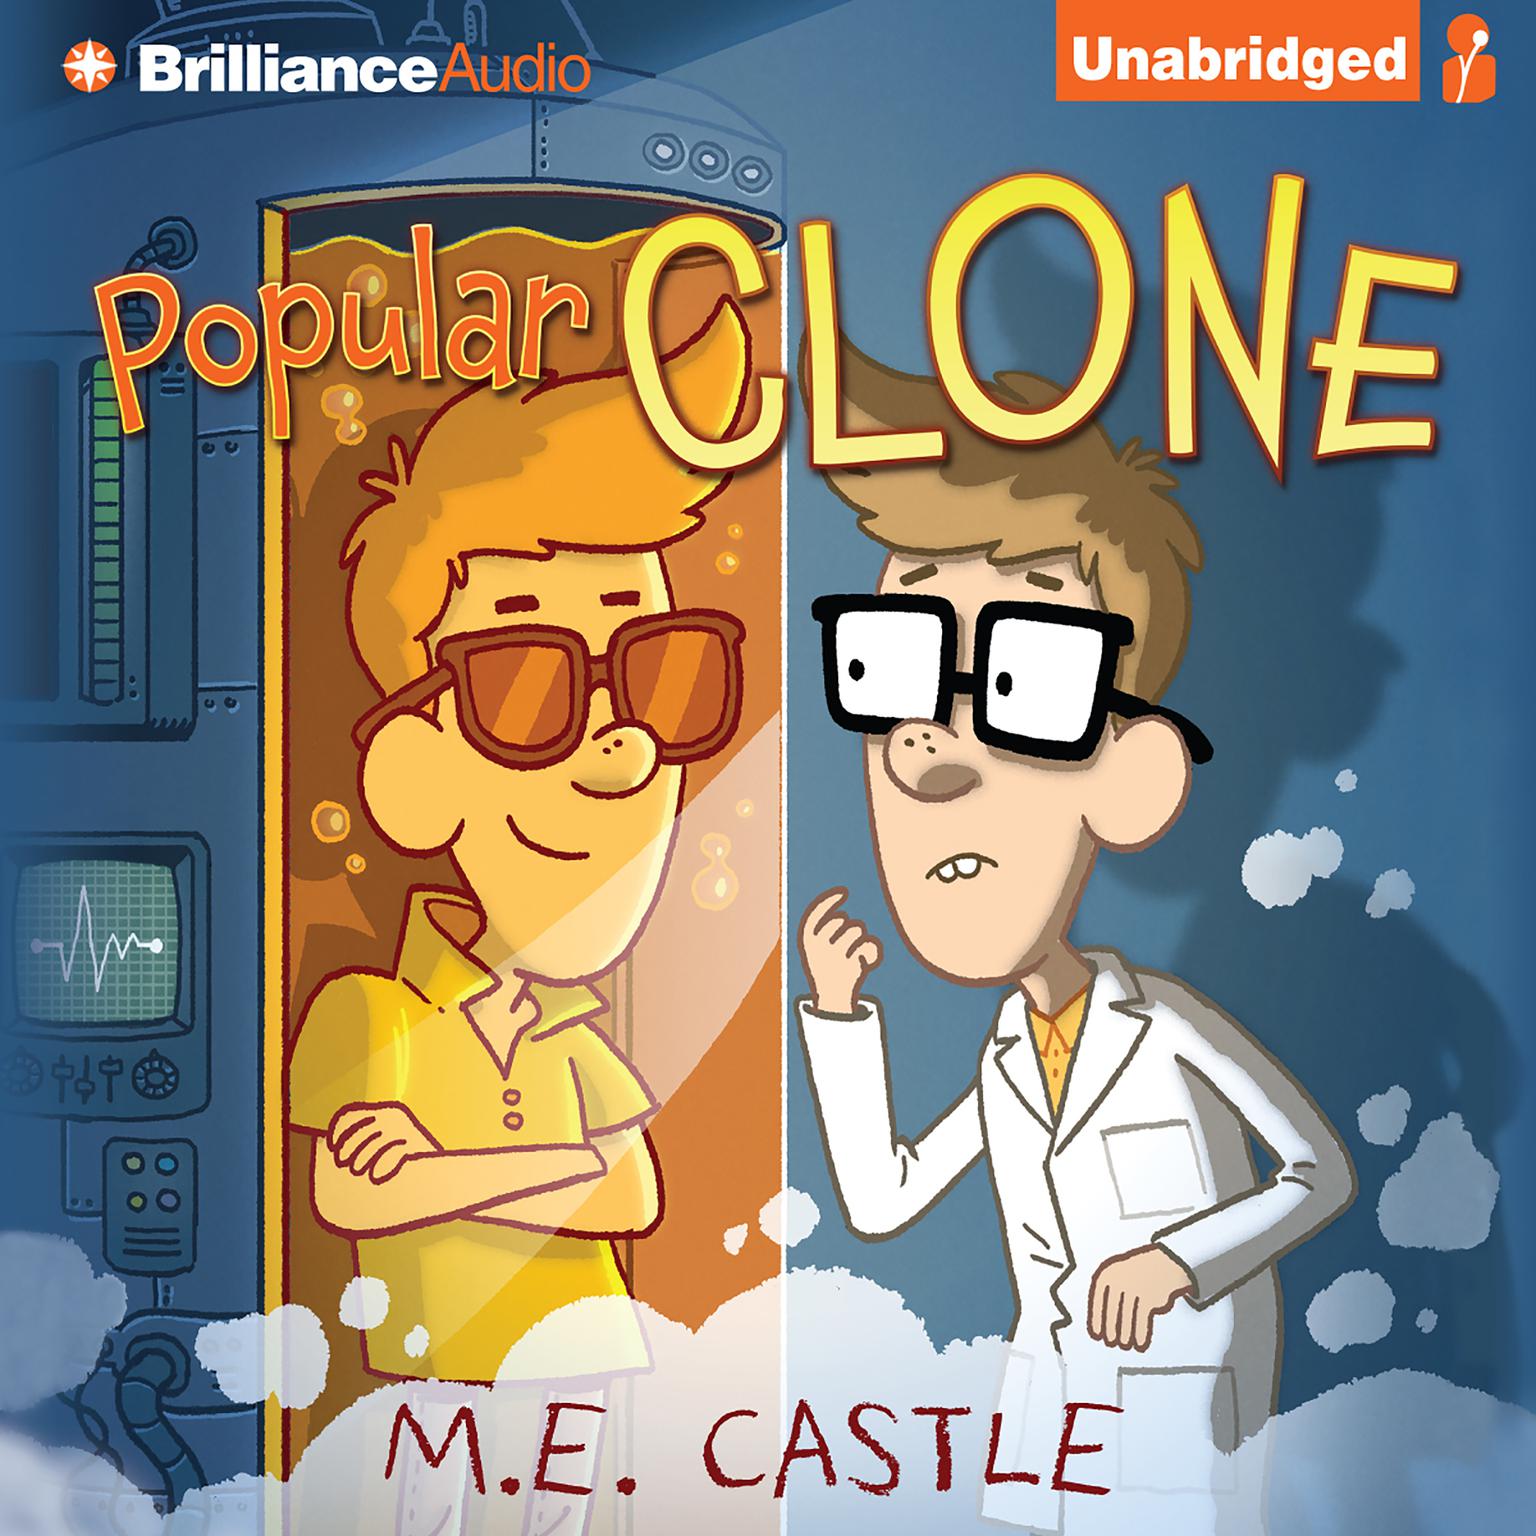 Popular Clone Audiobook, by M. E. Castle